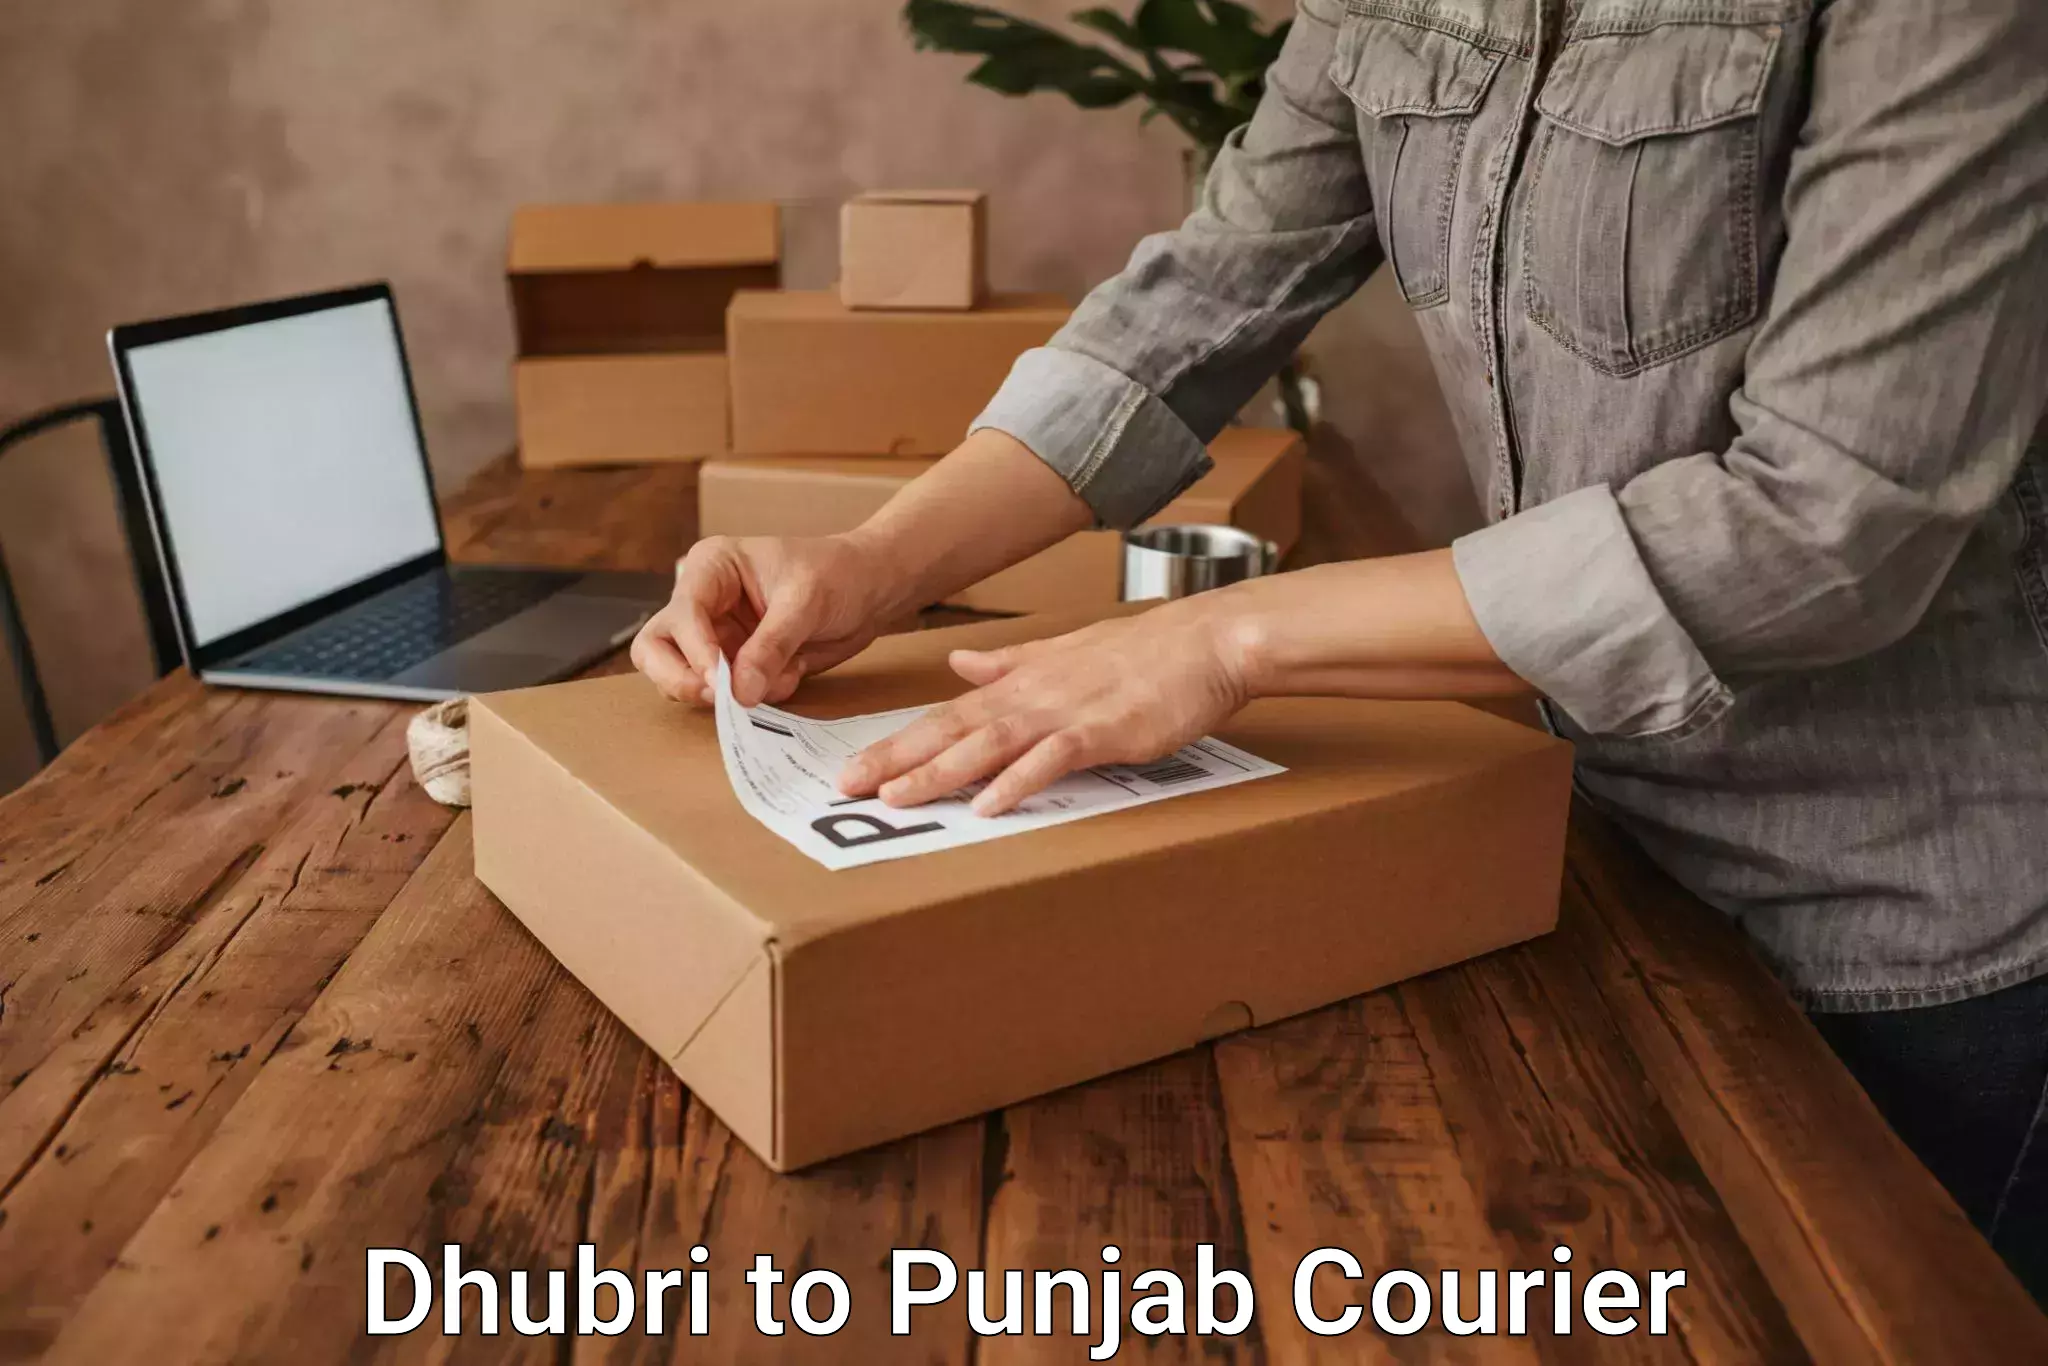 Affordable parcel service Dhubri to Pathankot